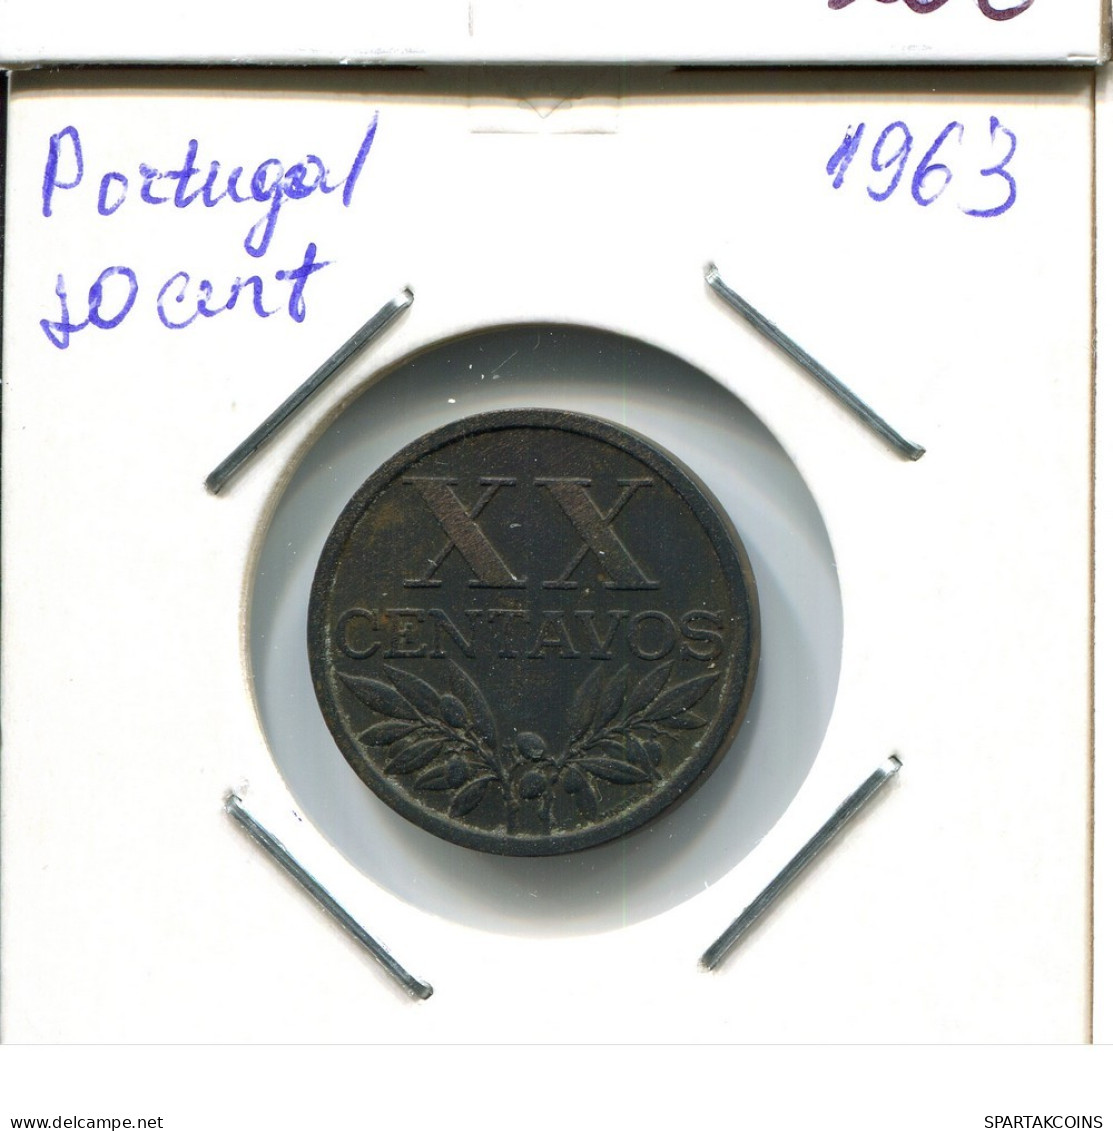 20 CENTAVOS 1963 PORTUGAL Coin #AT283.U.A - Portugal